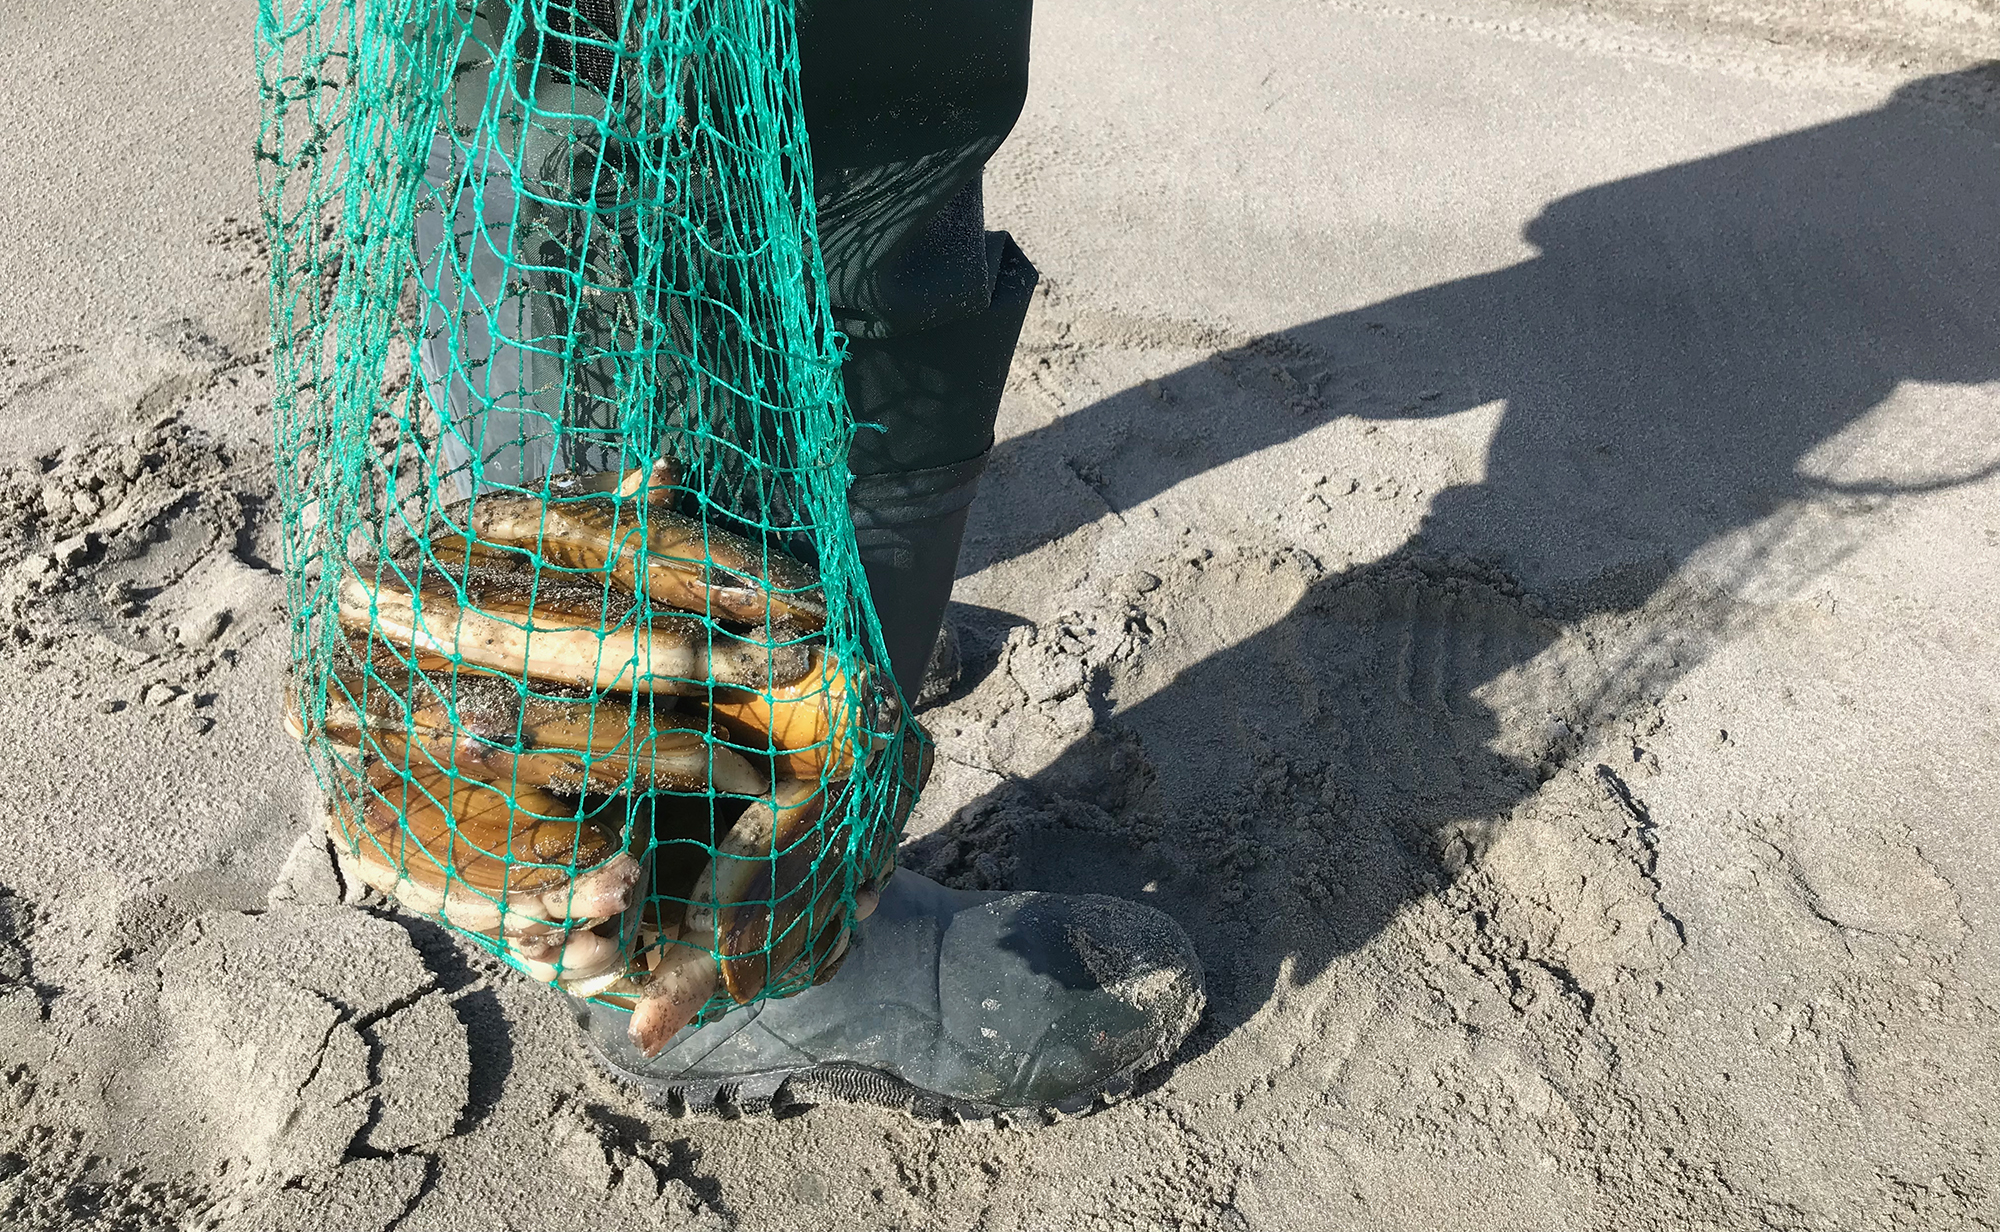 WDFW approves seven days of coastal razor clam digs starting Nov